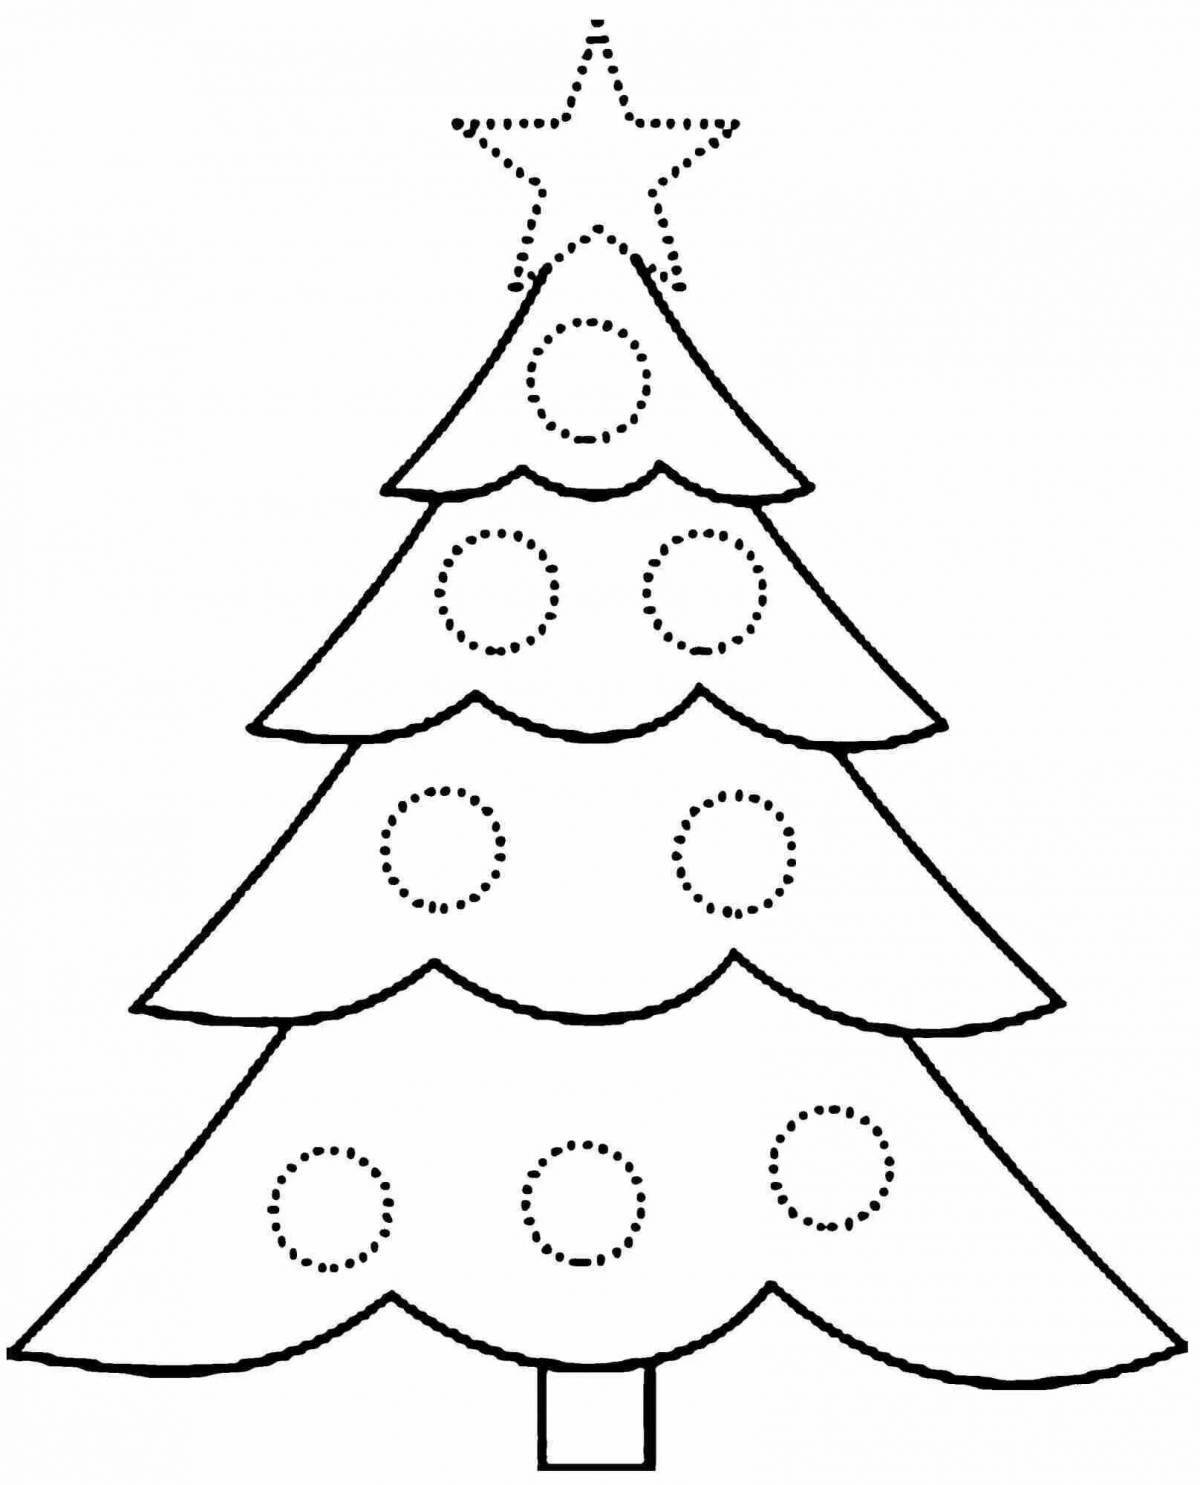 Joyful Christmas tree picture for kids